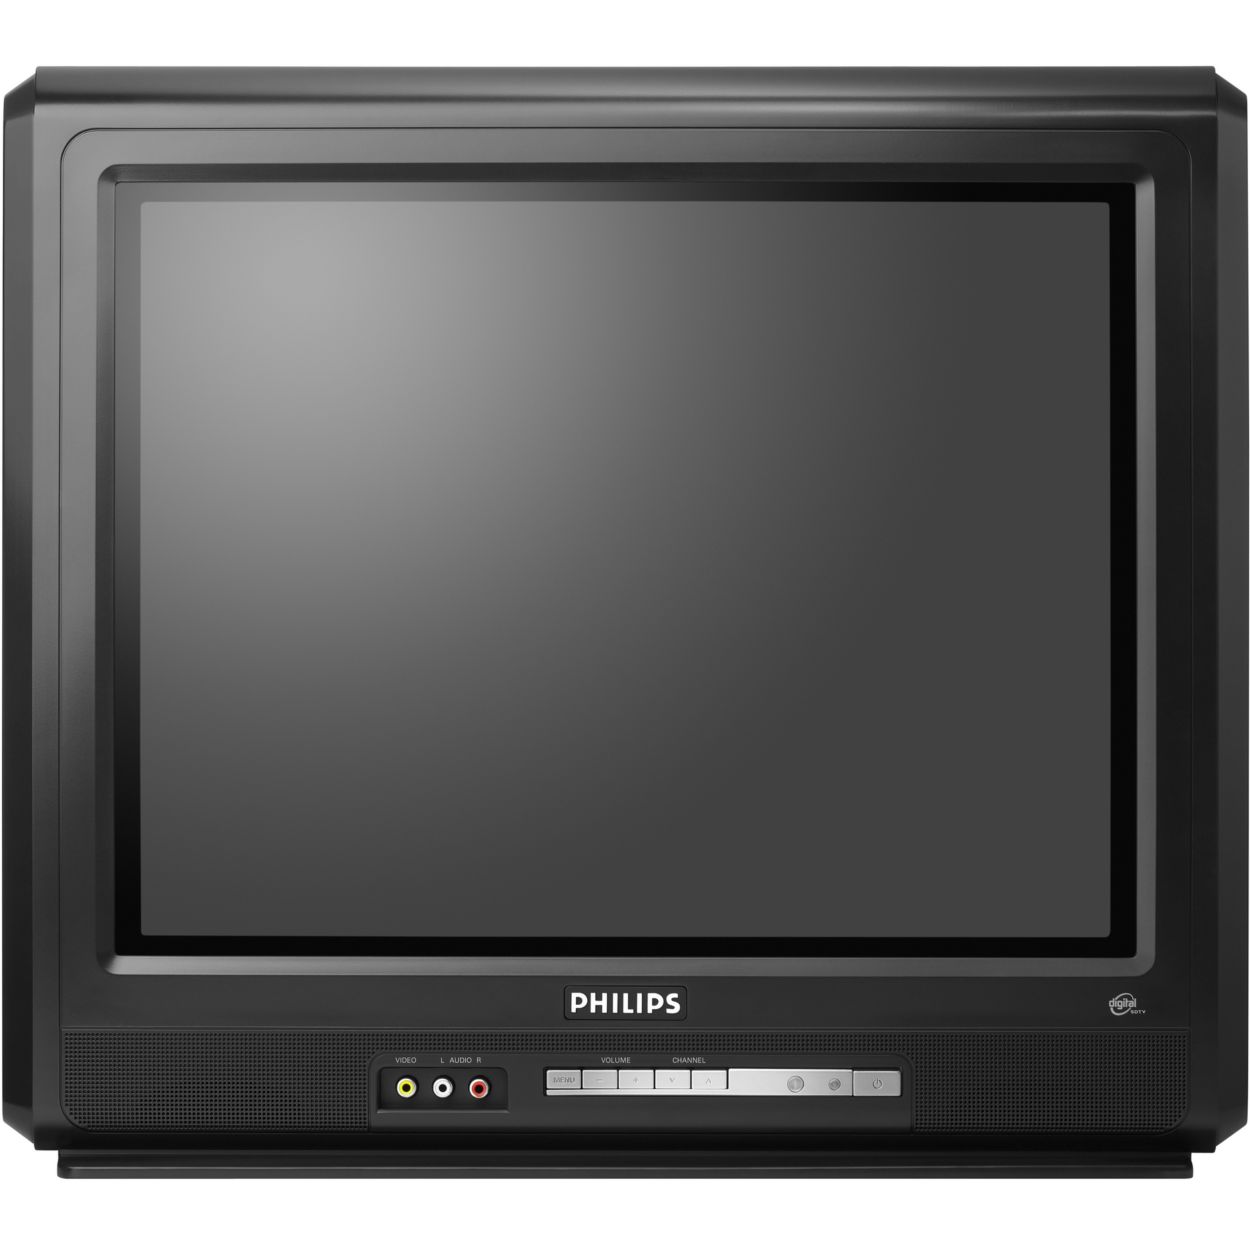 Филипс черный экран. Телевизор Sony Trinitron ЭЛТ. Philips CRT TV 14 дюймов. LG 14" ЭЛТ телевизор чёрный. Телевизор Филипс 20 дюймов.